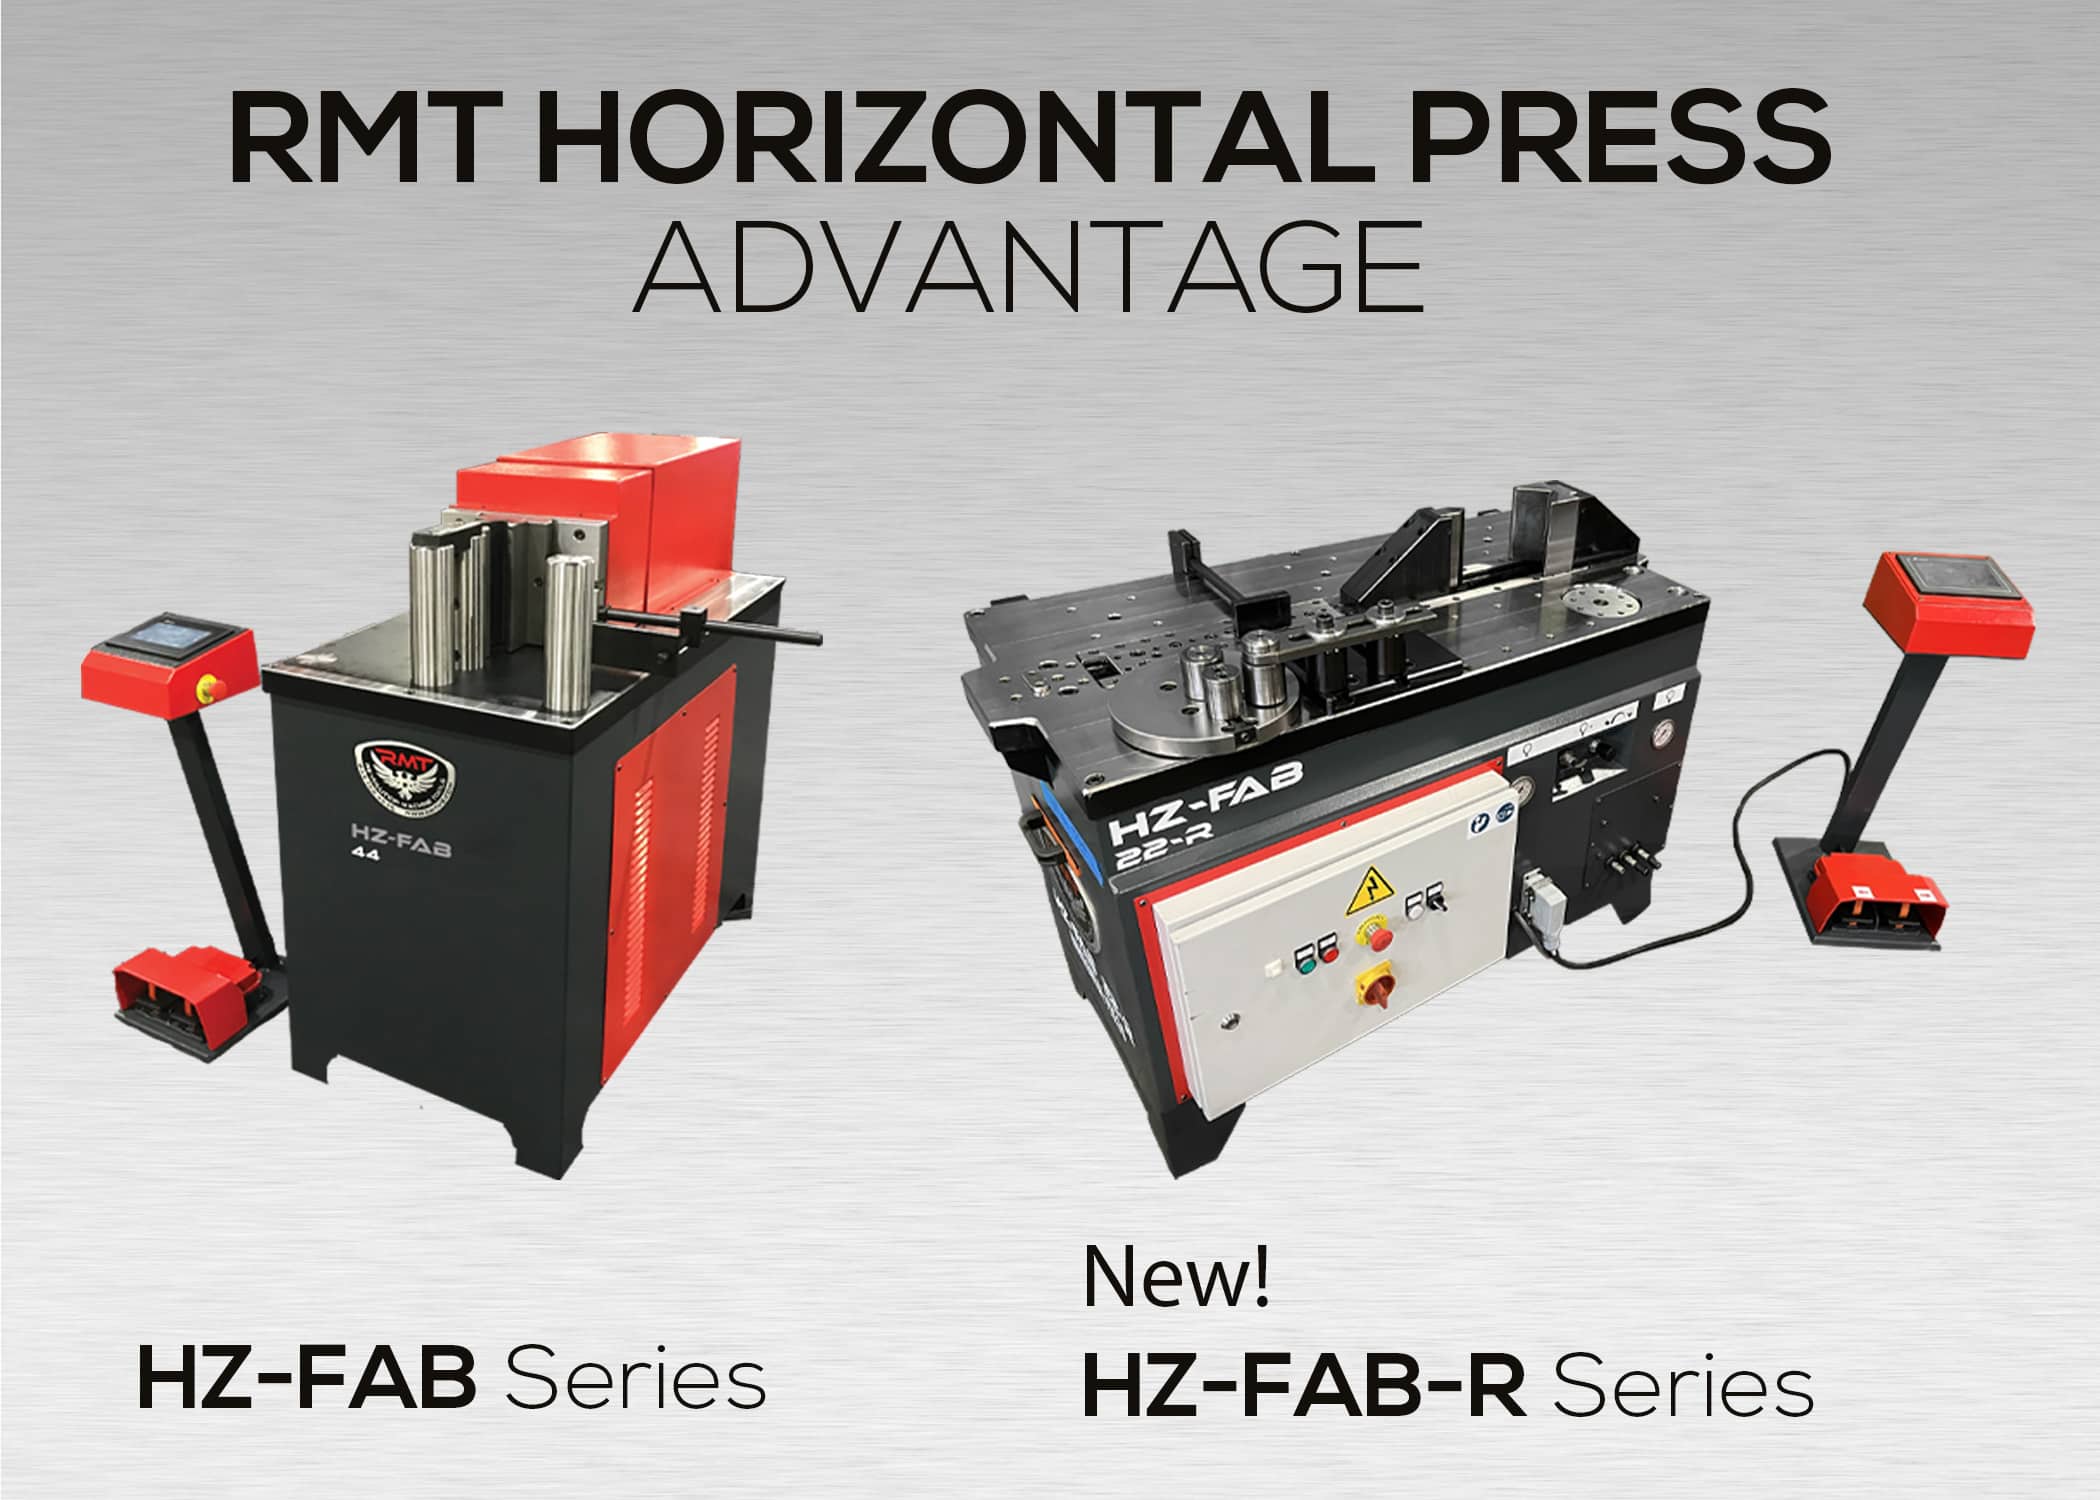 RMT Horiztonal Press Advantage Featured